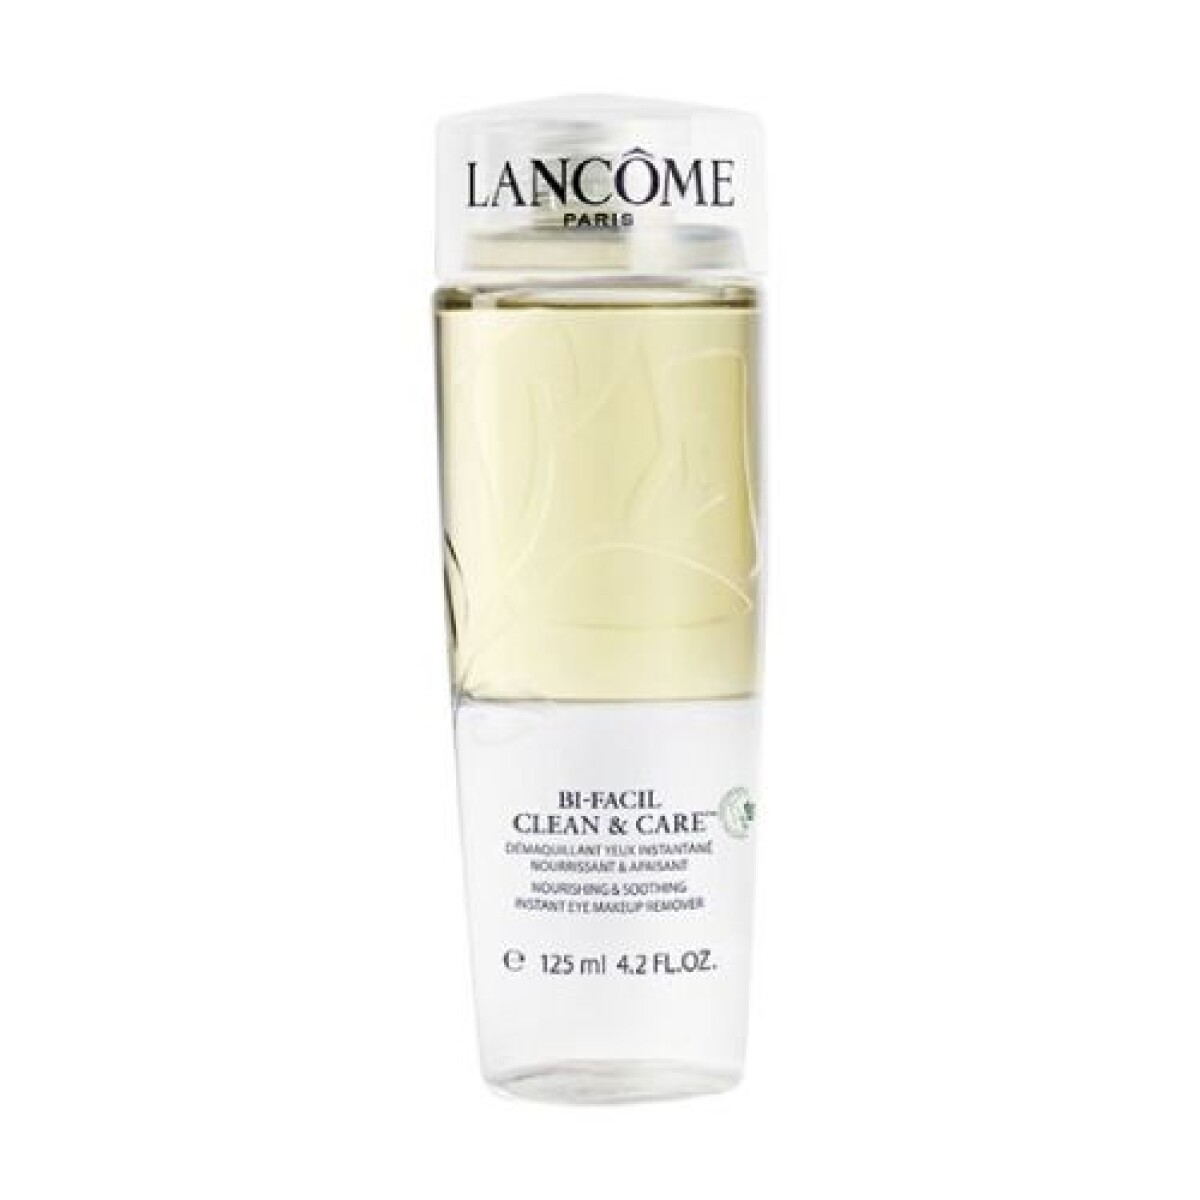 Lancôme Bi-Facil Clean & Clear Desmaquillante de Ojos 125ml 